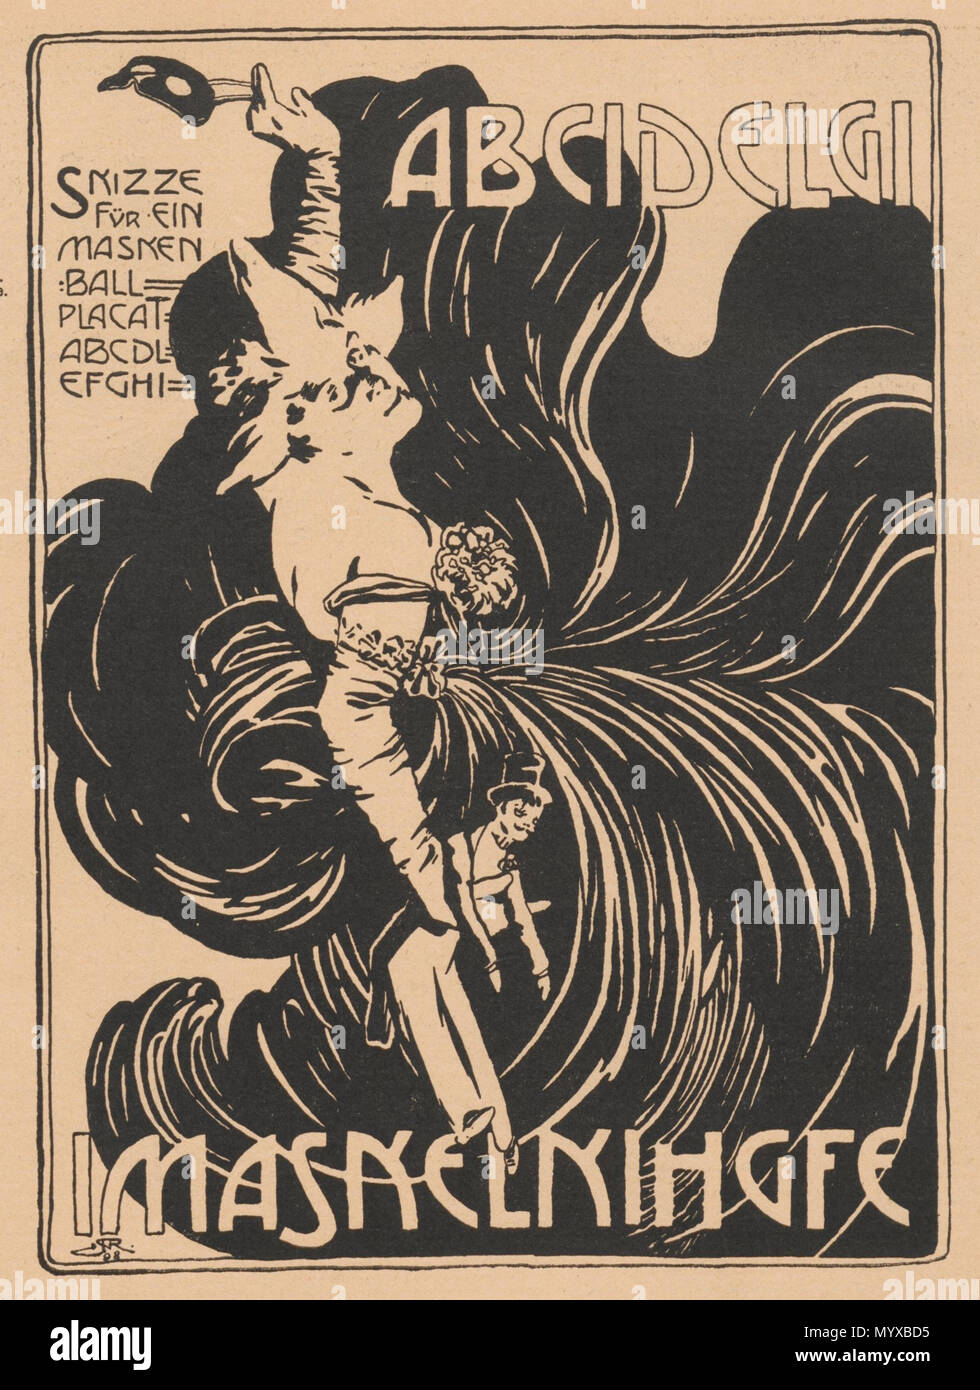 Englisch: Poster Skizze von Alfred Roller. . 1898. Alfred Roller 6  Abcidelgi Stockfotografie - Alamy